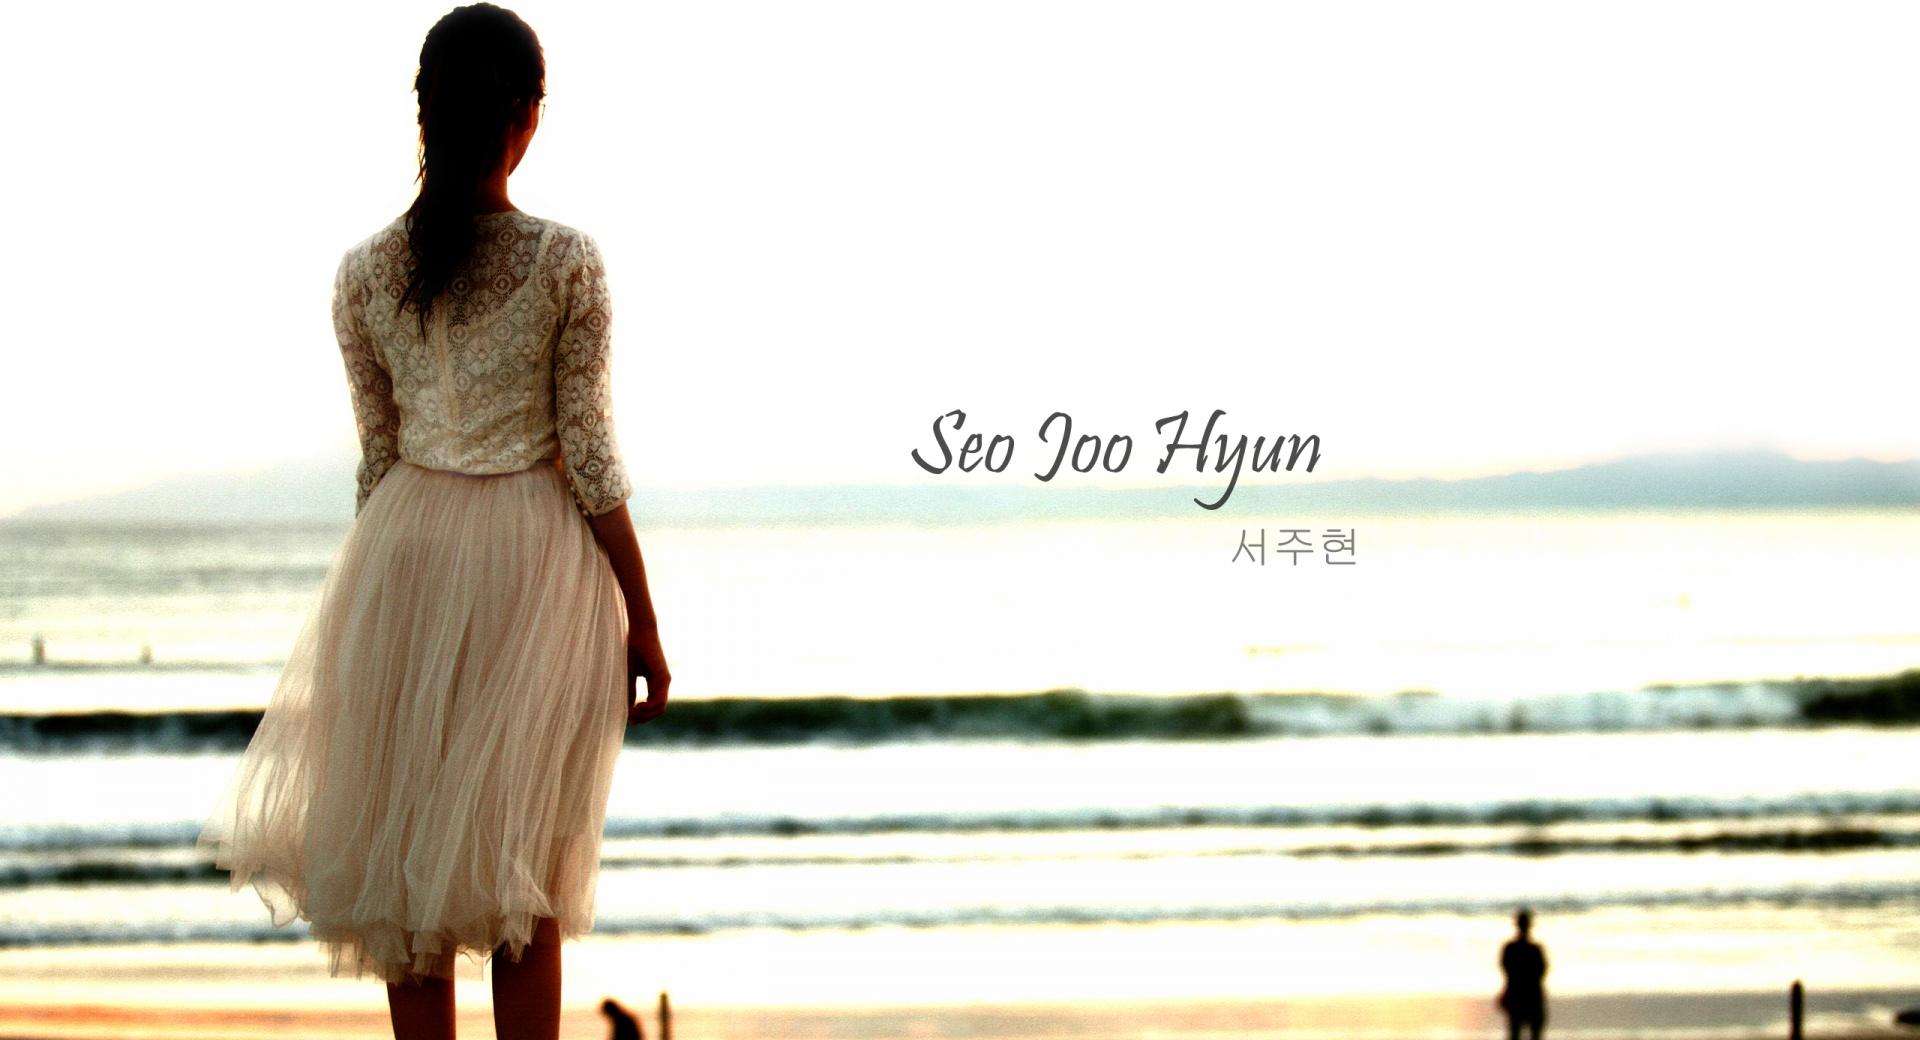 SNSD Seo Joo Hyun at 2048 x 2048 iPad size wallpapers HD quality